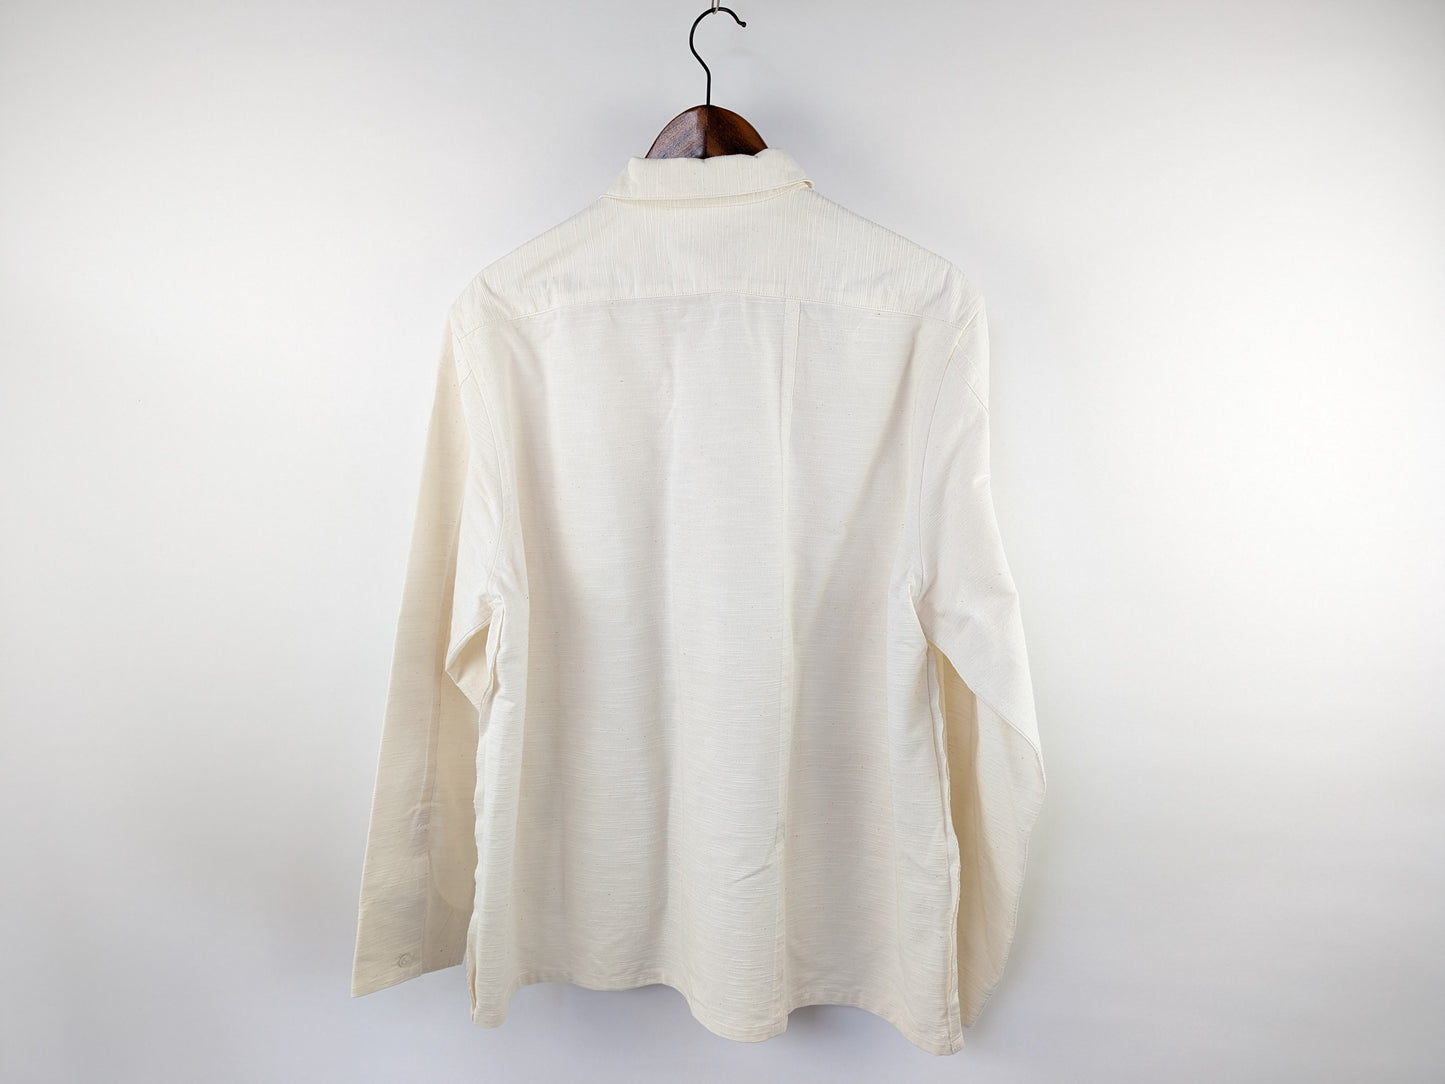 <OSOCU> 知多木綿 無漂白無染色 オープンカラーシャツジャケット カバーオール